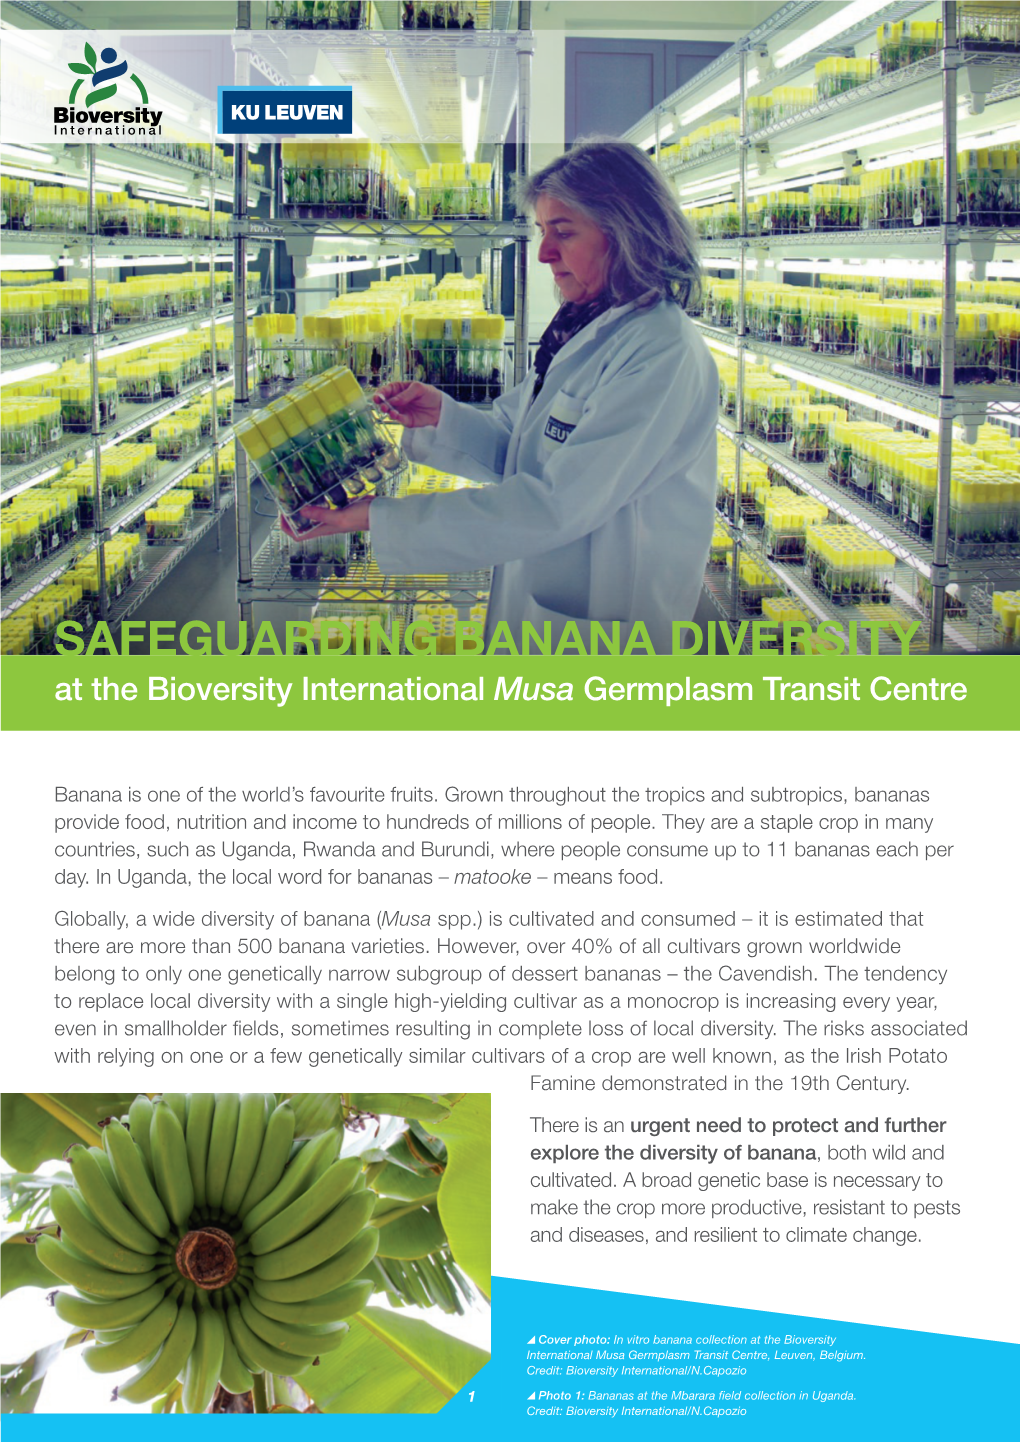 SAFEGUARDING BANANA DIVERSITY at the Bioversity International Musa Germplasm Transit Centre